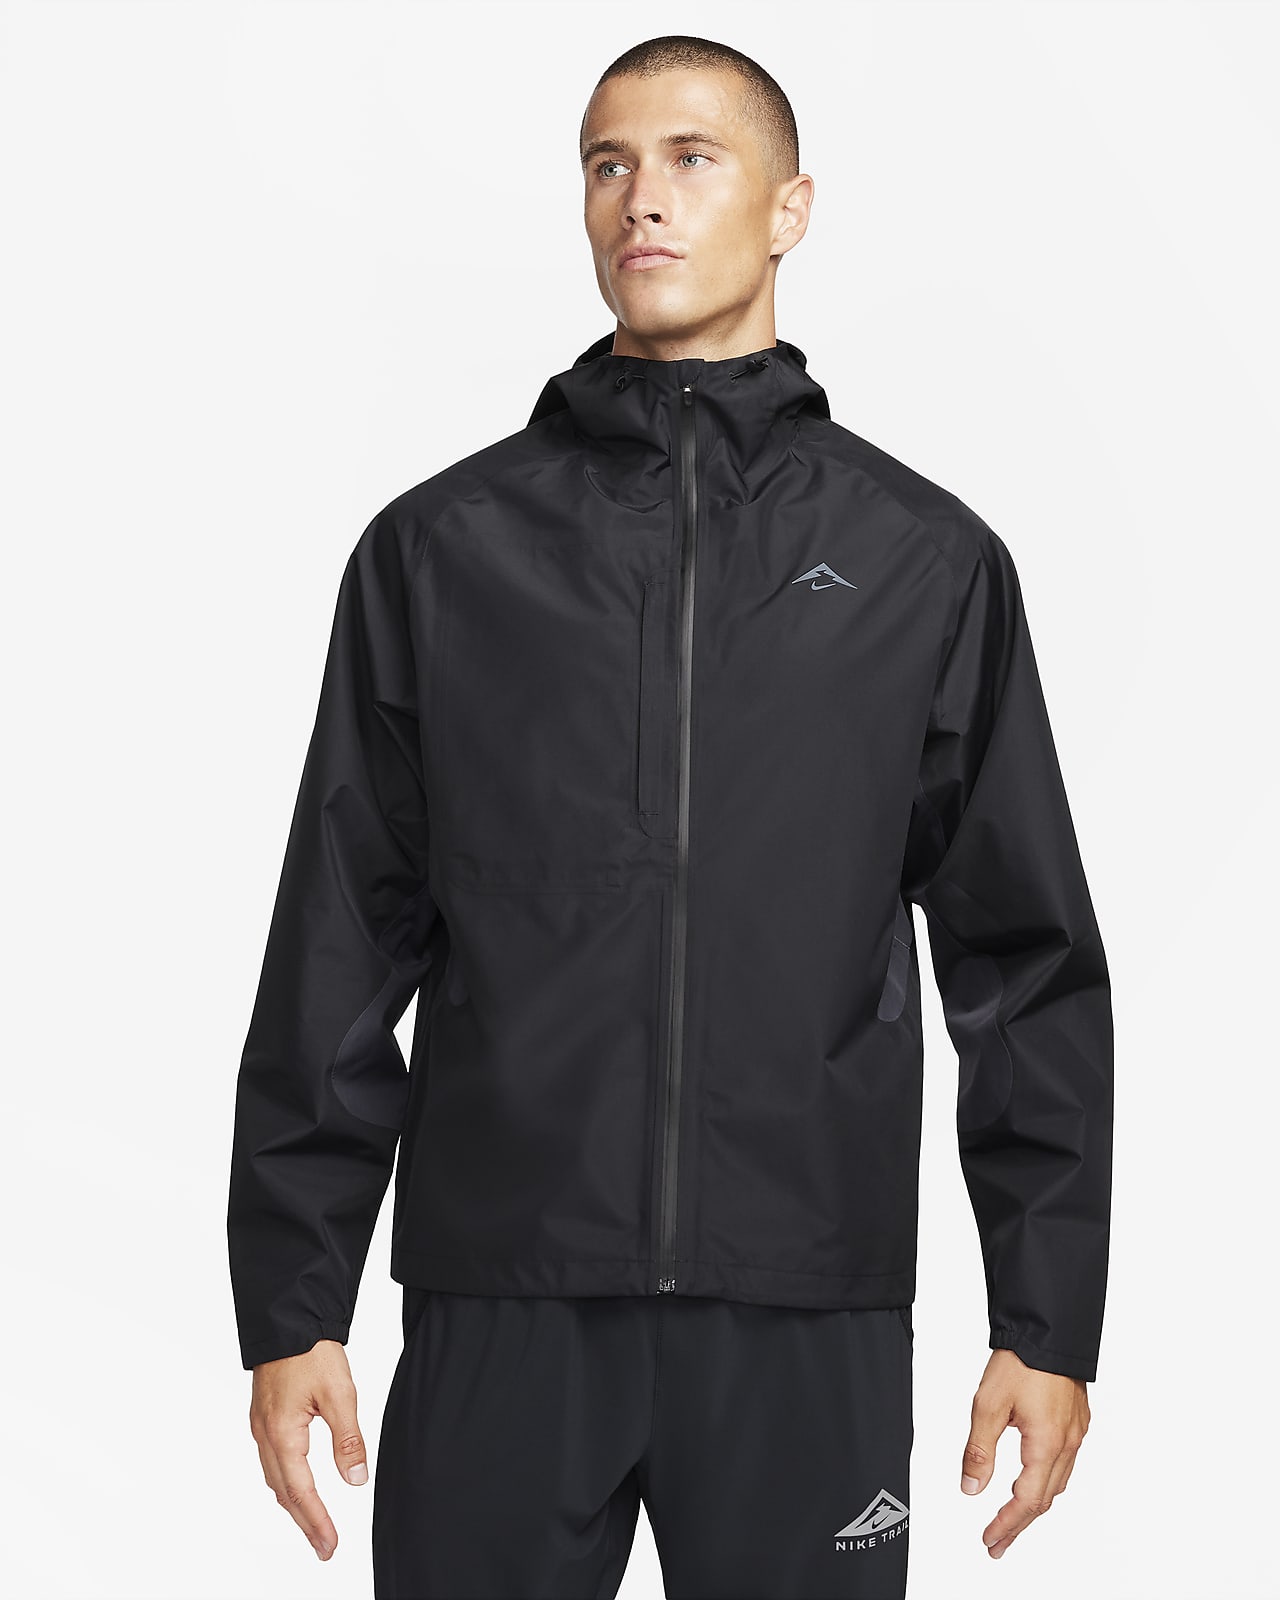 Nike Trail "Cosmic Peaks" GORE-TEX INFINIUM Men's Running Jacket